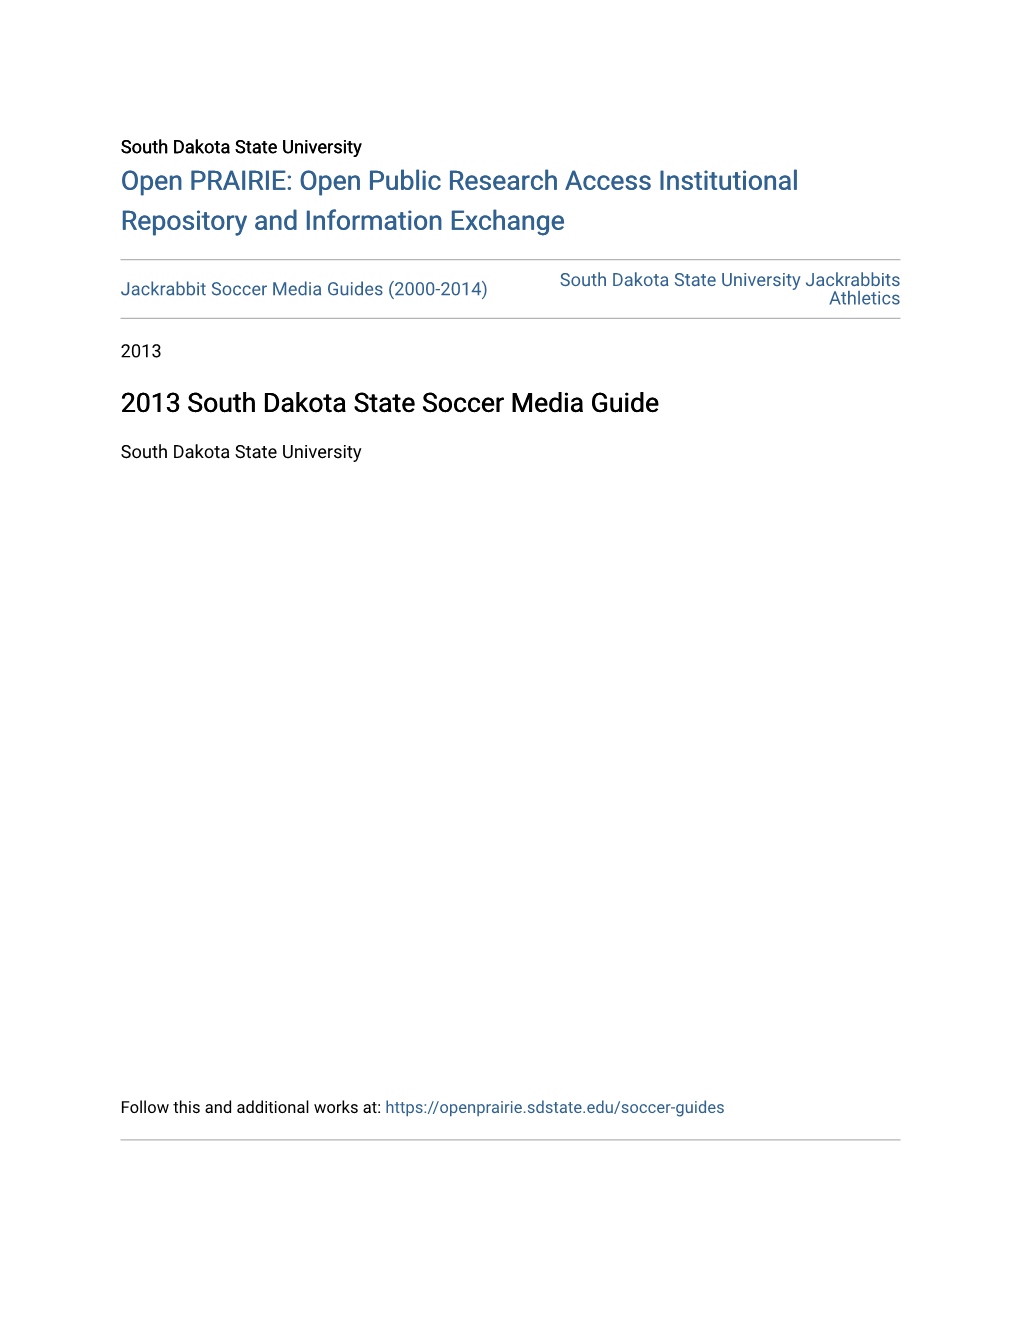 2013 South Dakota State Soccer Media Guide